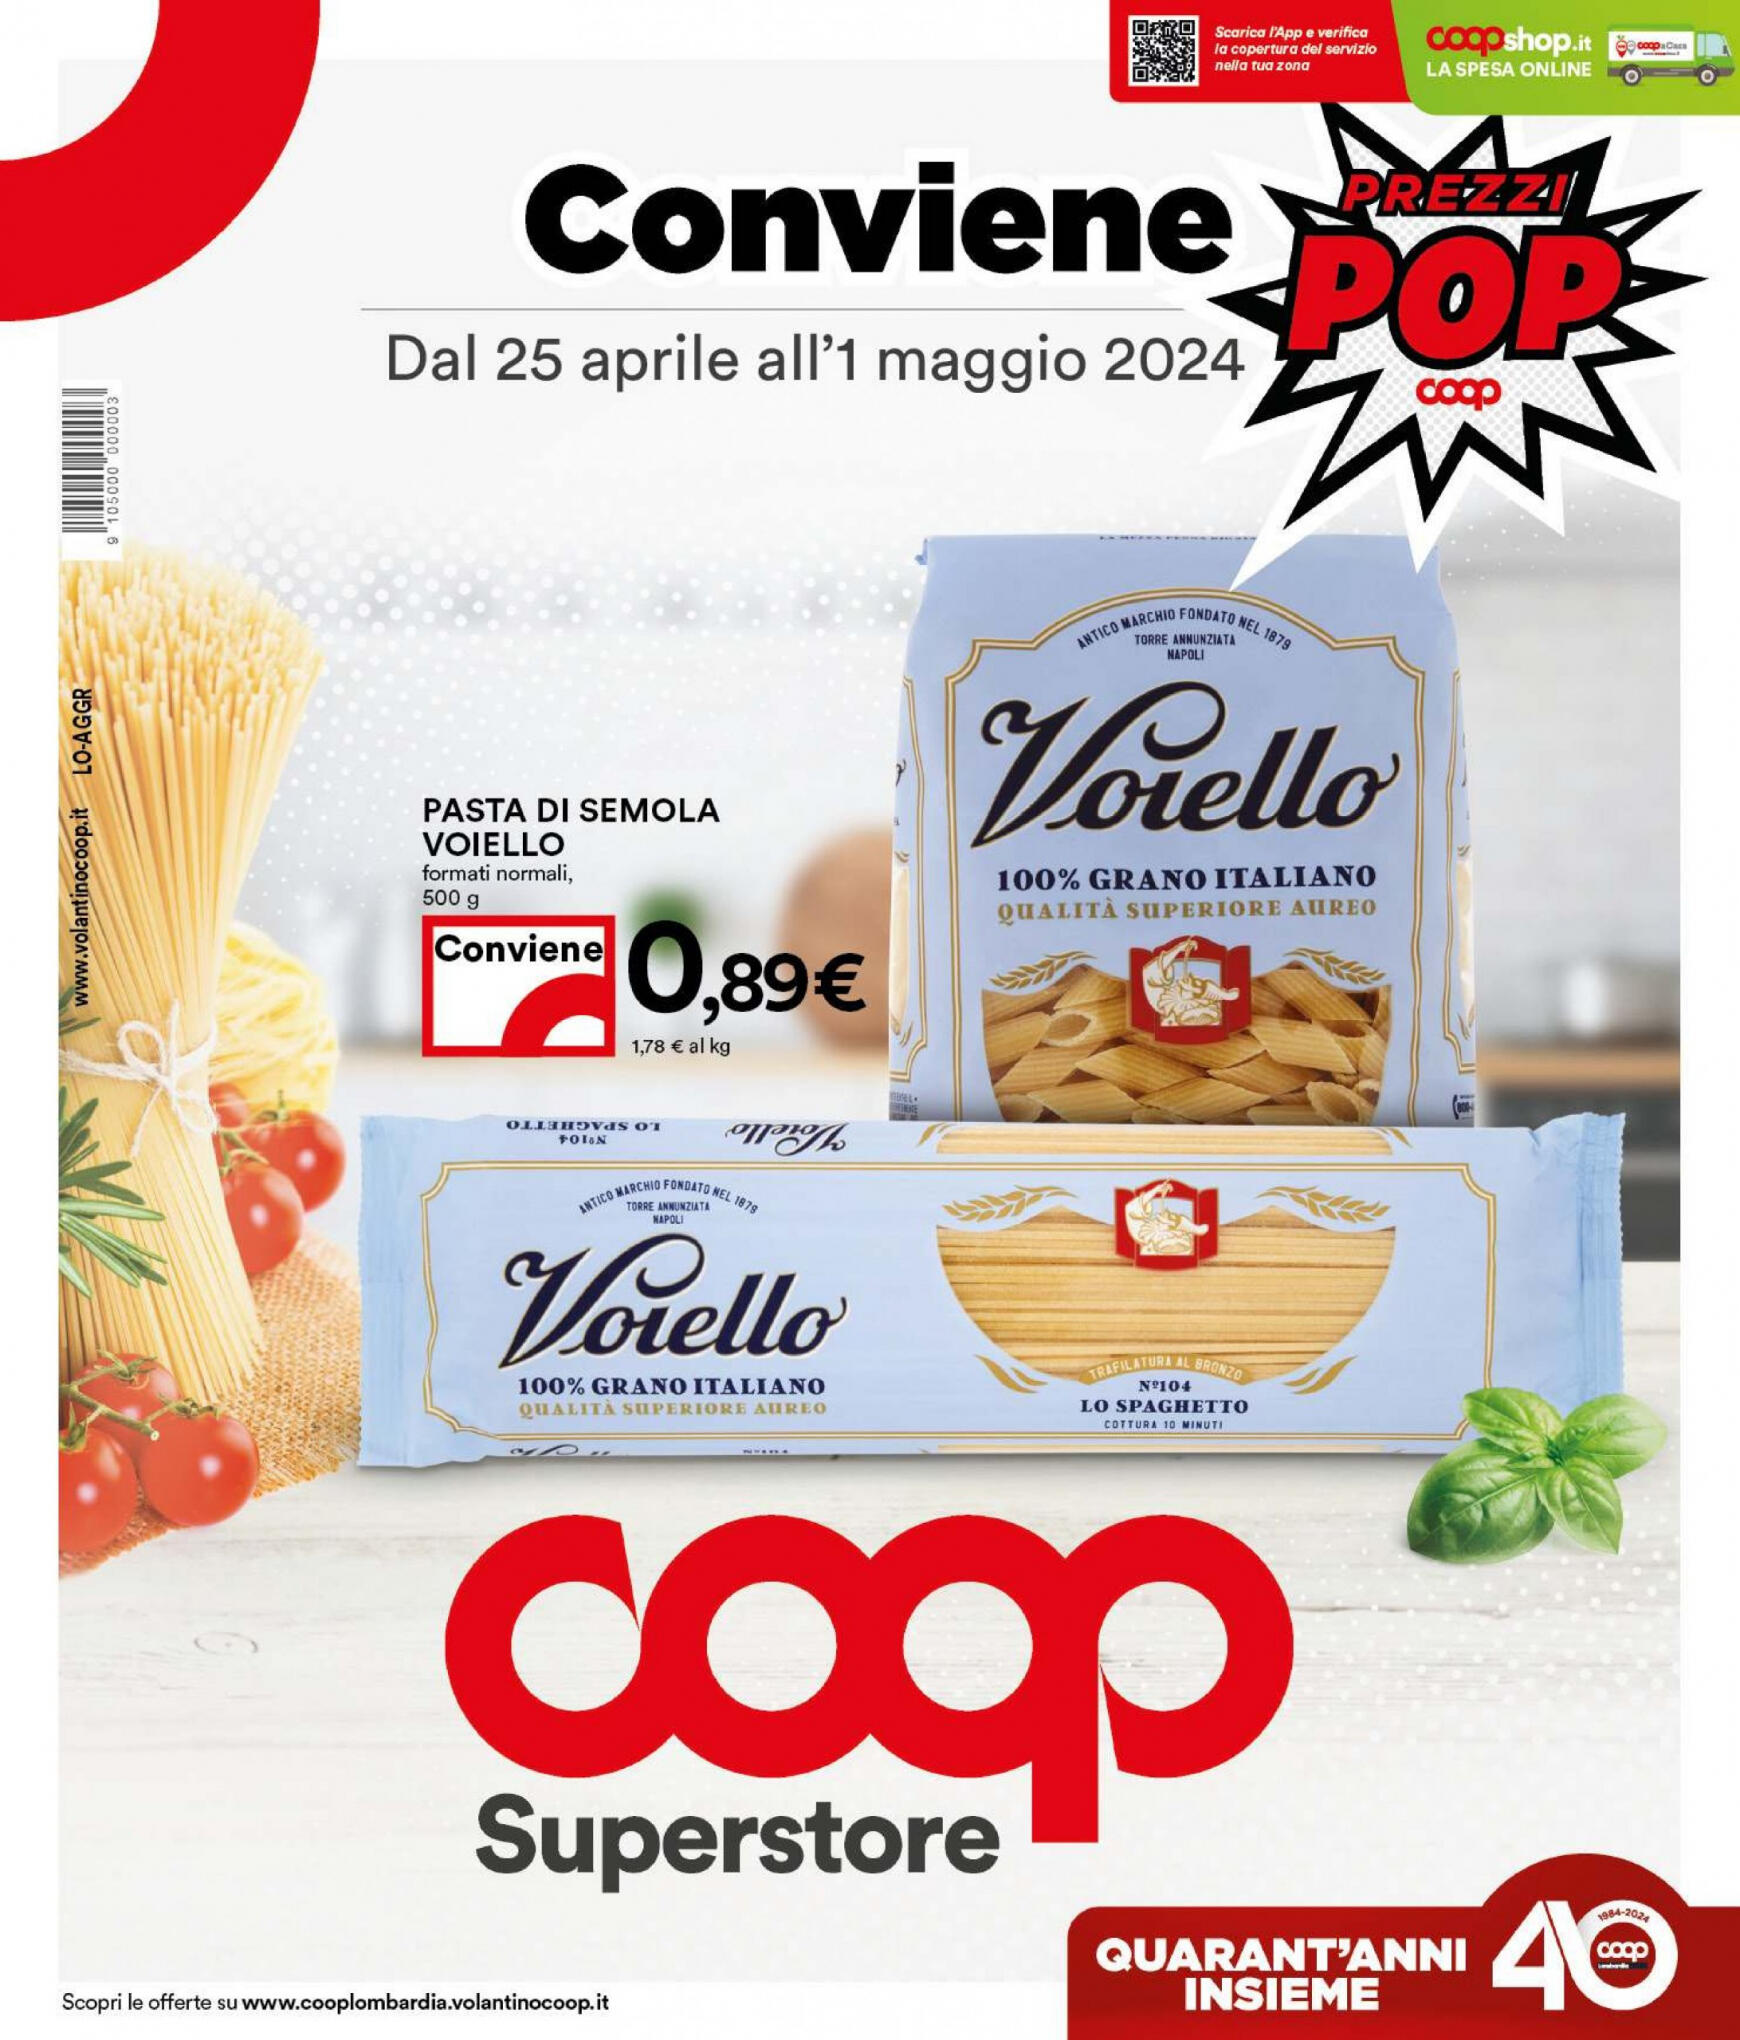 coop - Nuovo volantino Coop 25.04. - 01.05.